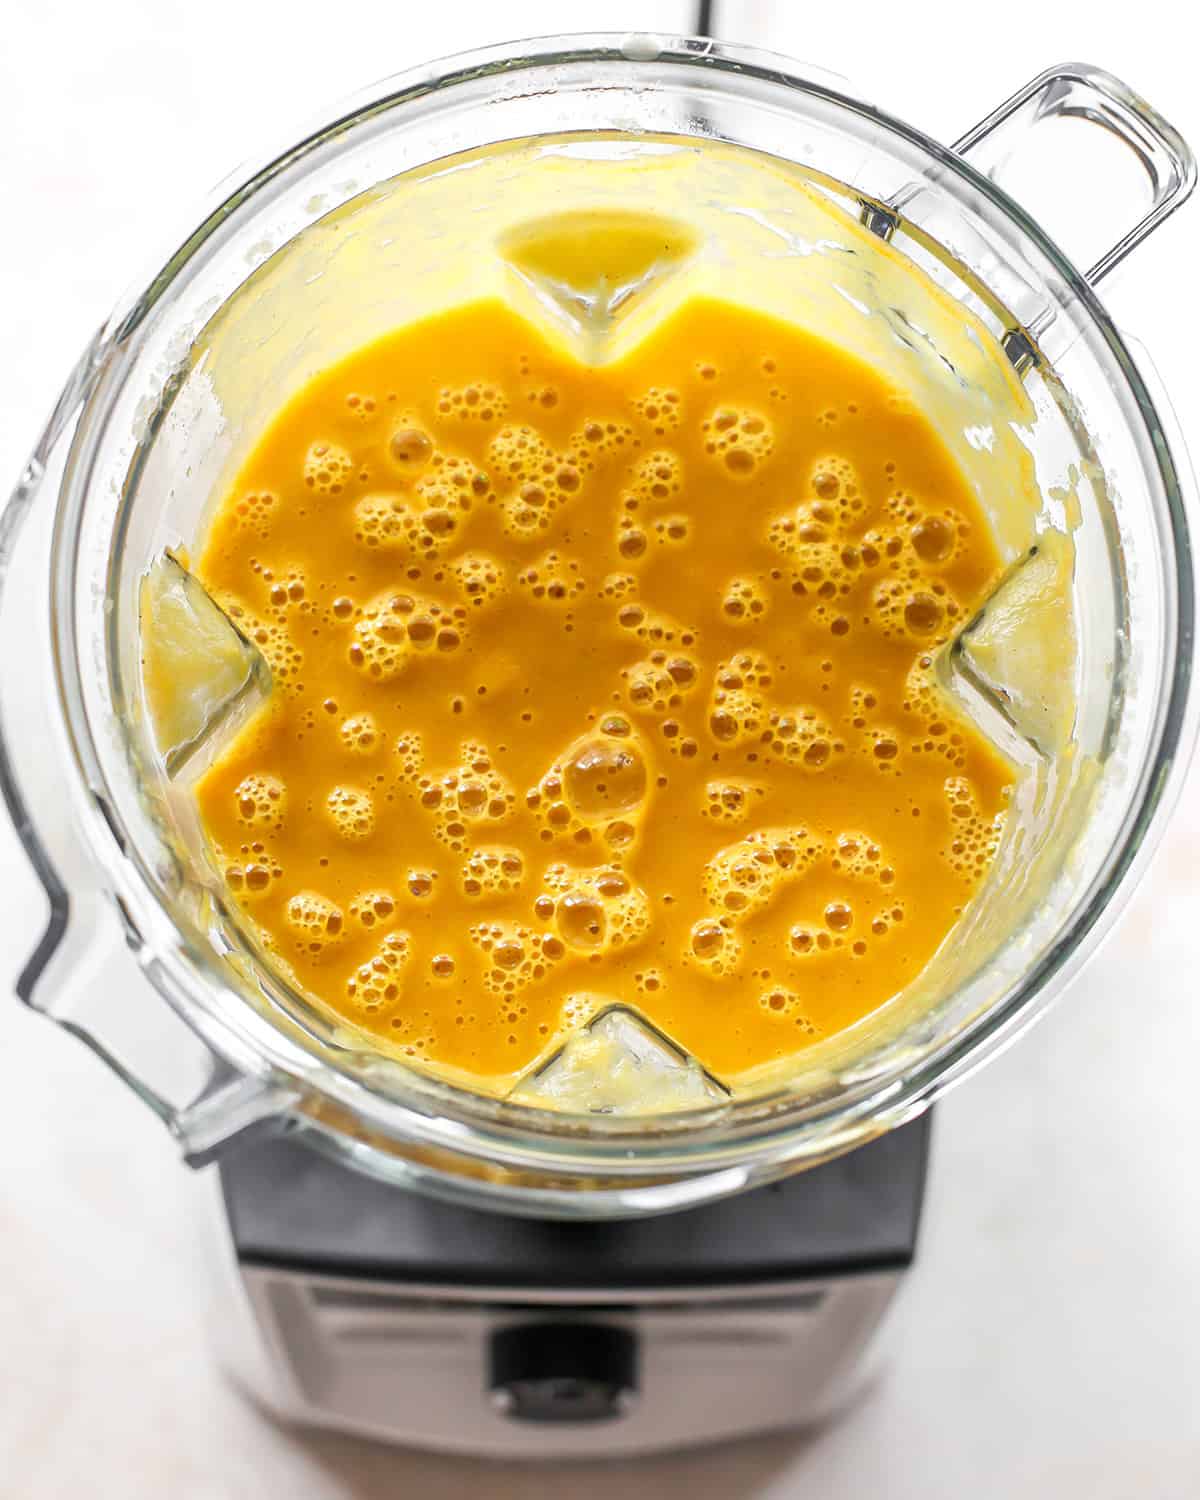 How to Make Butternut Squash Soup - ingredients in a blender after blending